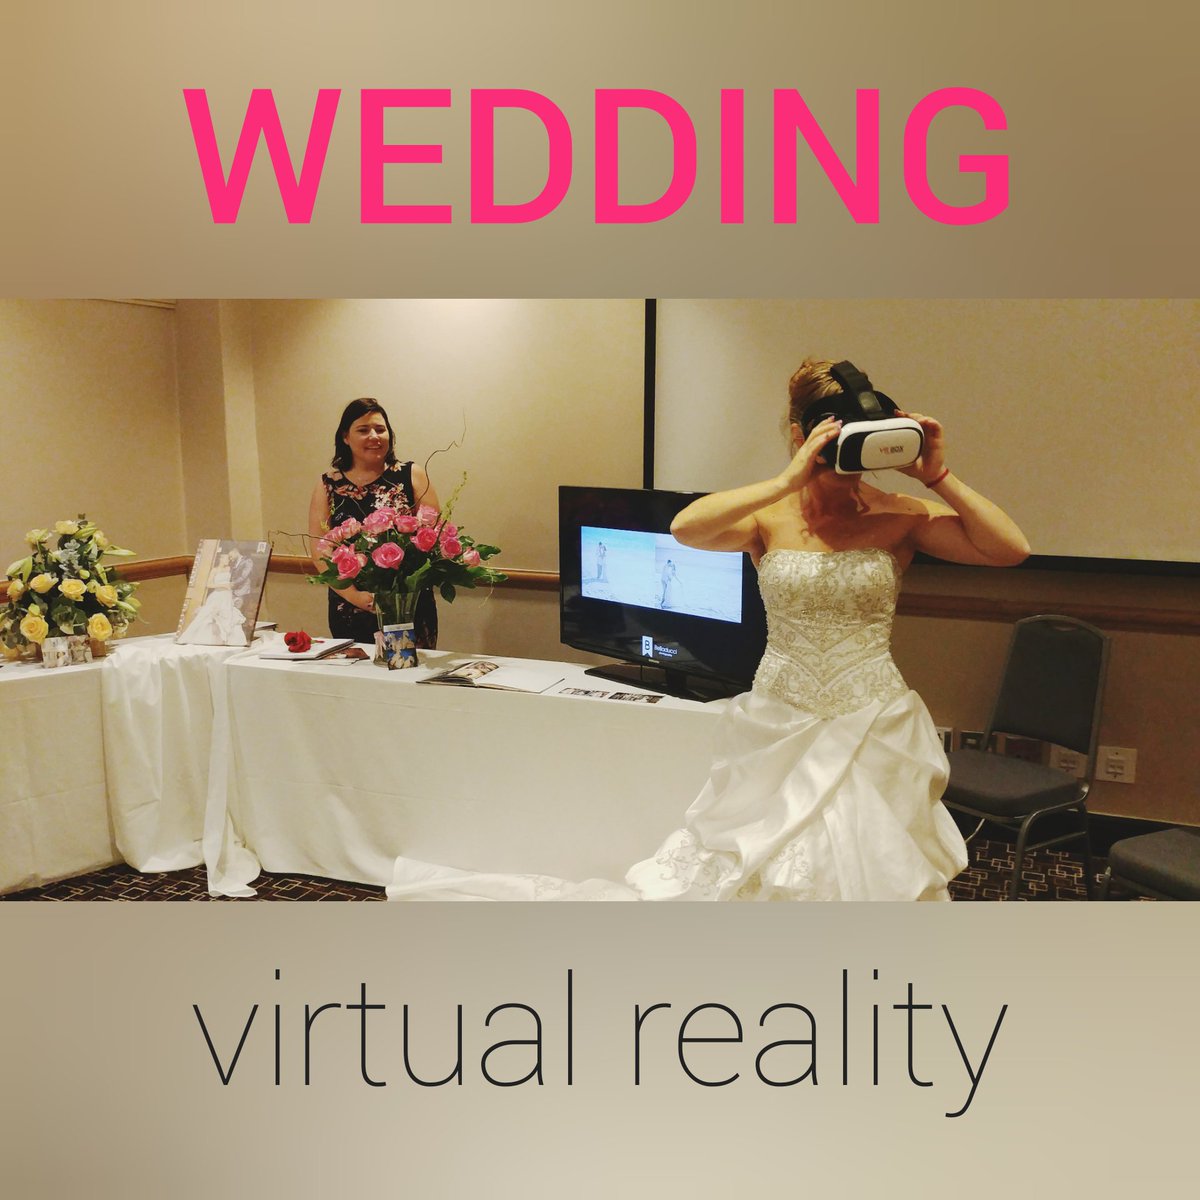 Wedding virtual reality video.
Capture memories in VR.
Re-live your wedding day.

Contact us to create a virtual memory of your wedding day.
vrvision.sa@gmail.com

#VirtualReality #weddingdress #weddingday #VR #wedding360 #vrvision